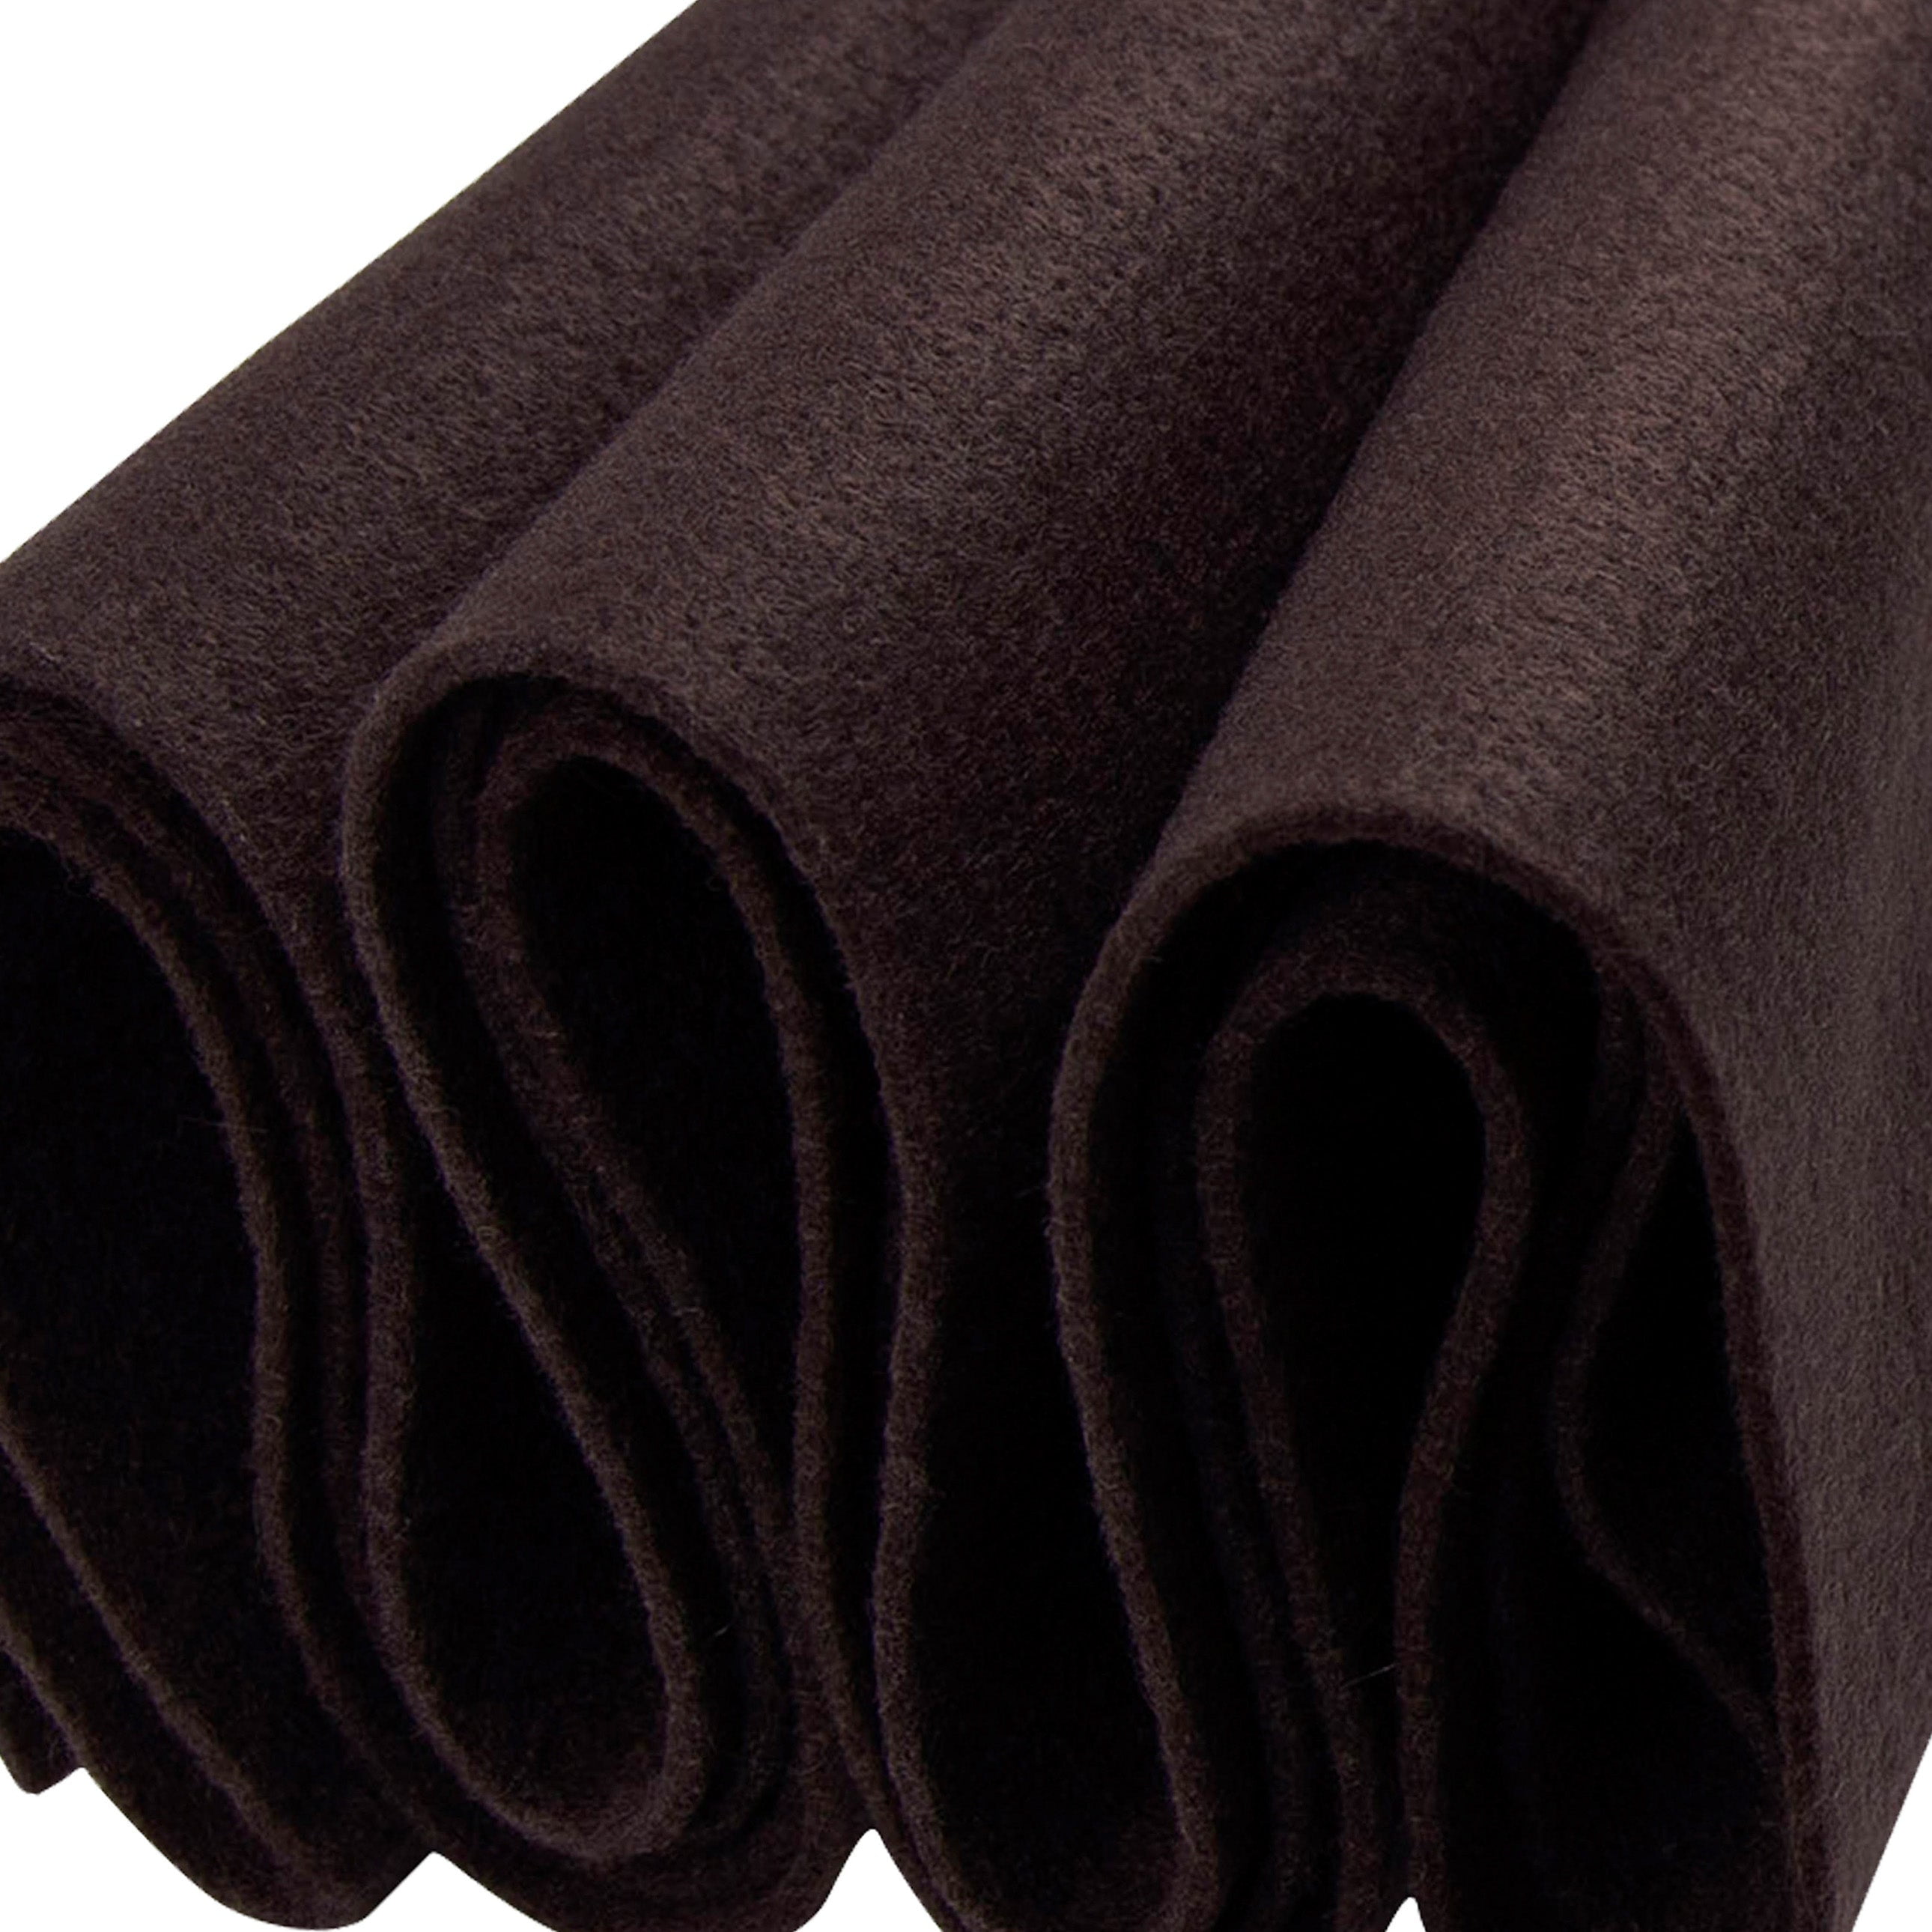 Wool Felt Black 36in x 36in Pre-cut Black Felt by National Nonwovens -  814859020474